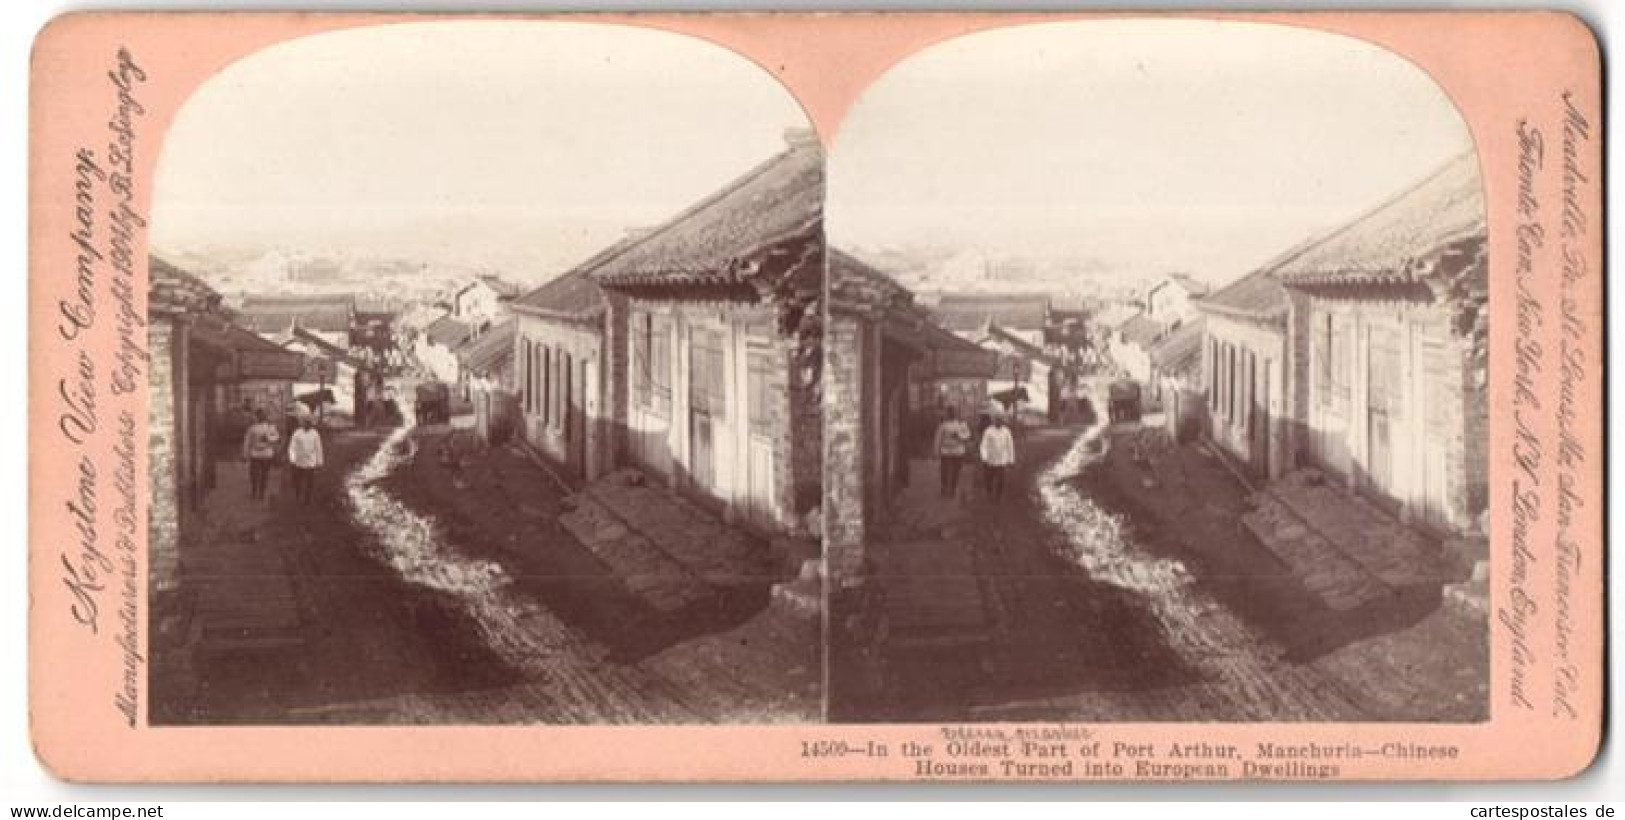 Stereo-Fotografie Keystone View Company, Meadville /Pa, Ansicht Port Arthur /Manchuria, Ältester Stadtteil  - Stereoscopic